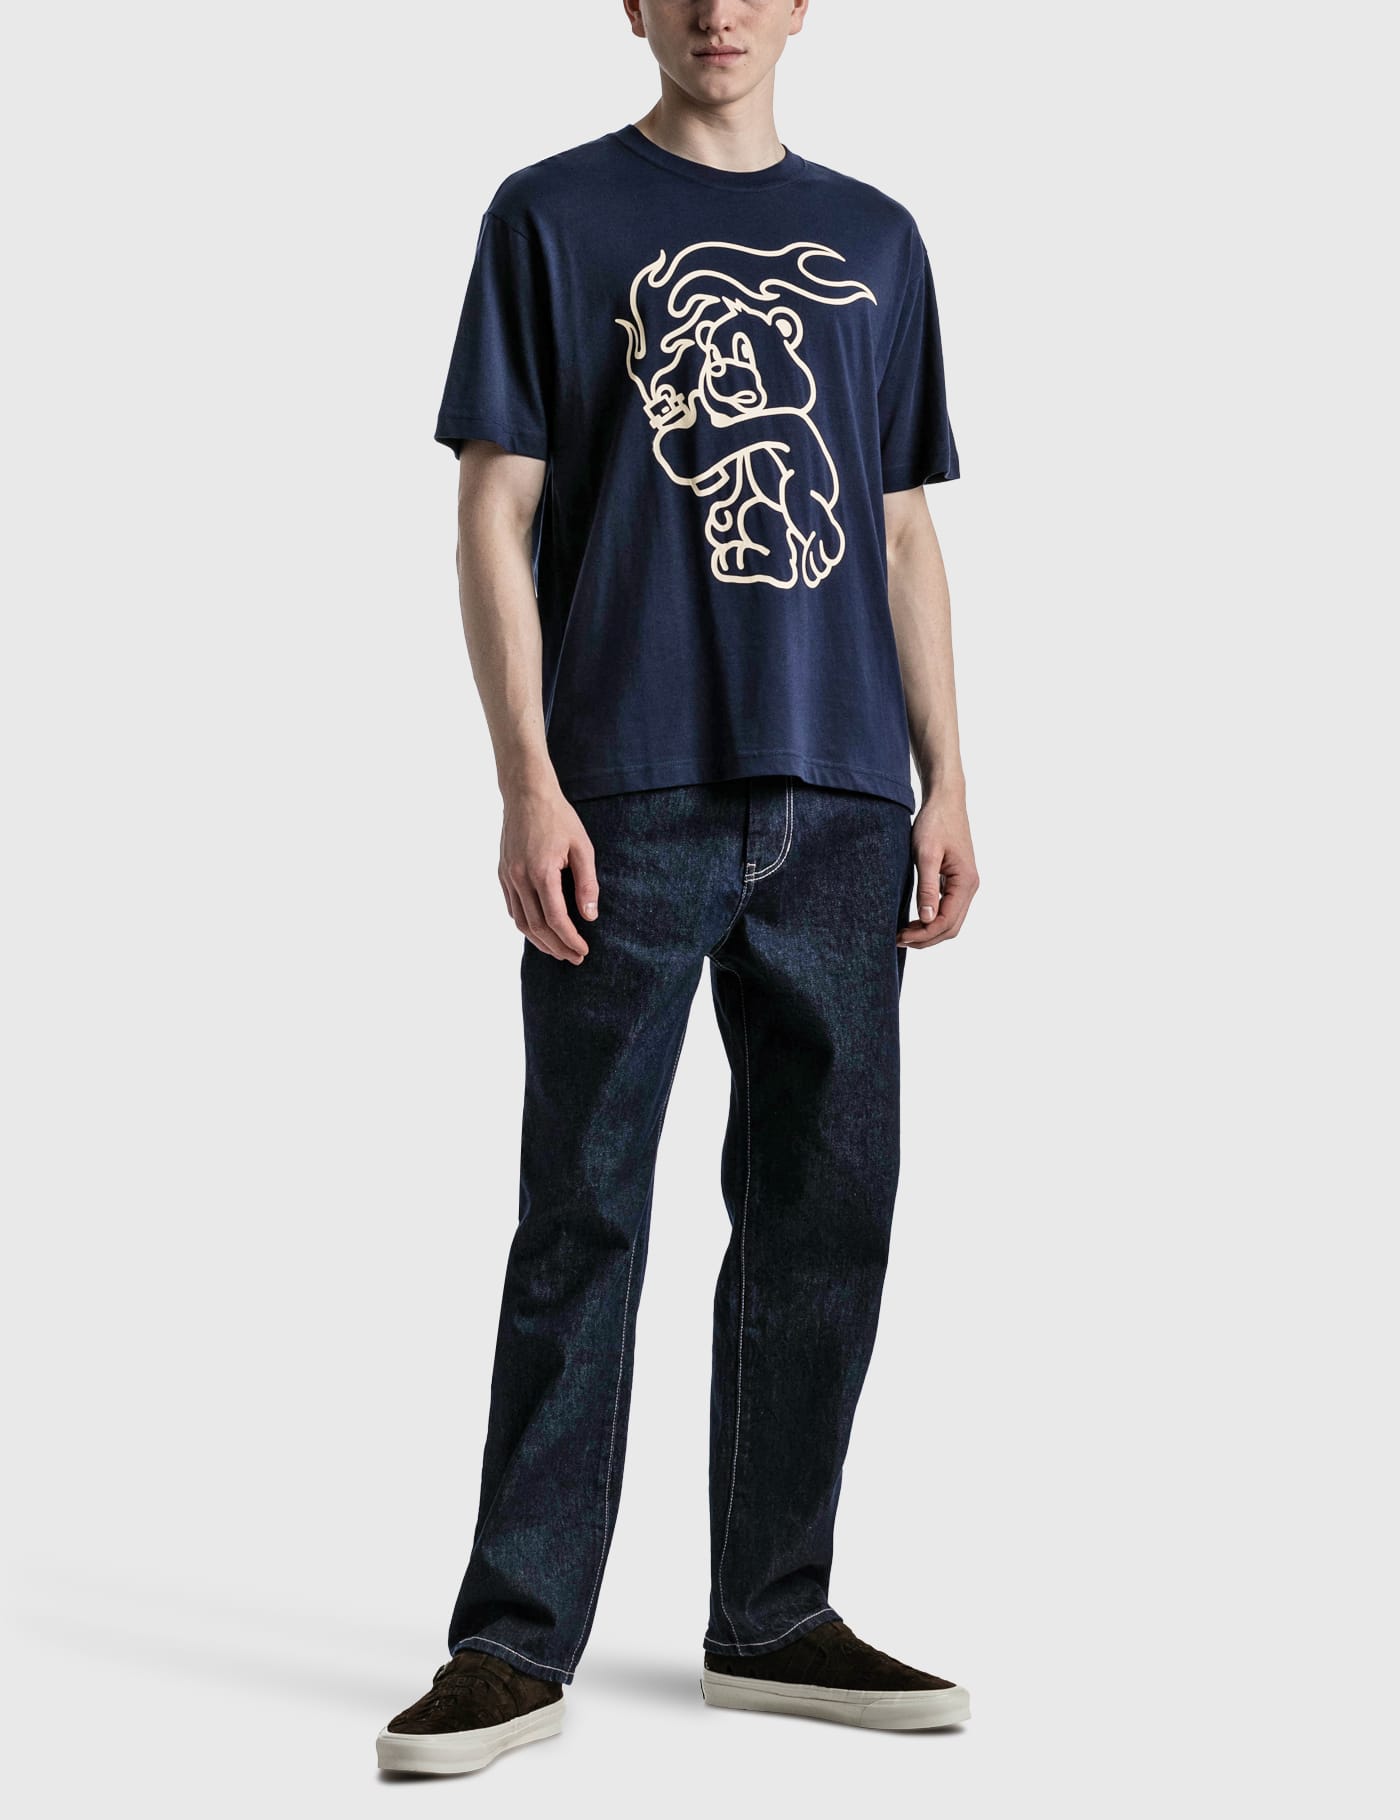 LMC - LMC Flame Bear T-shirt | HBX - Globally Curated Fashion and 